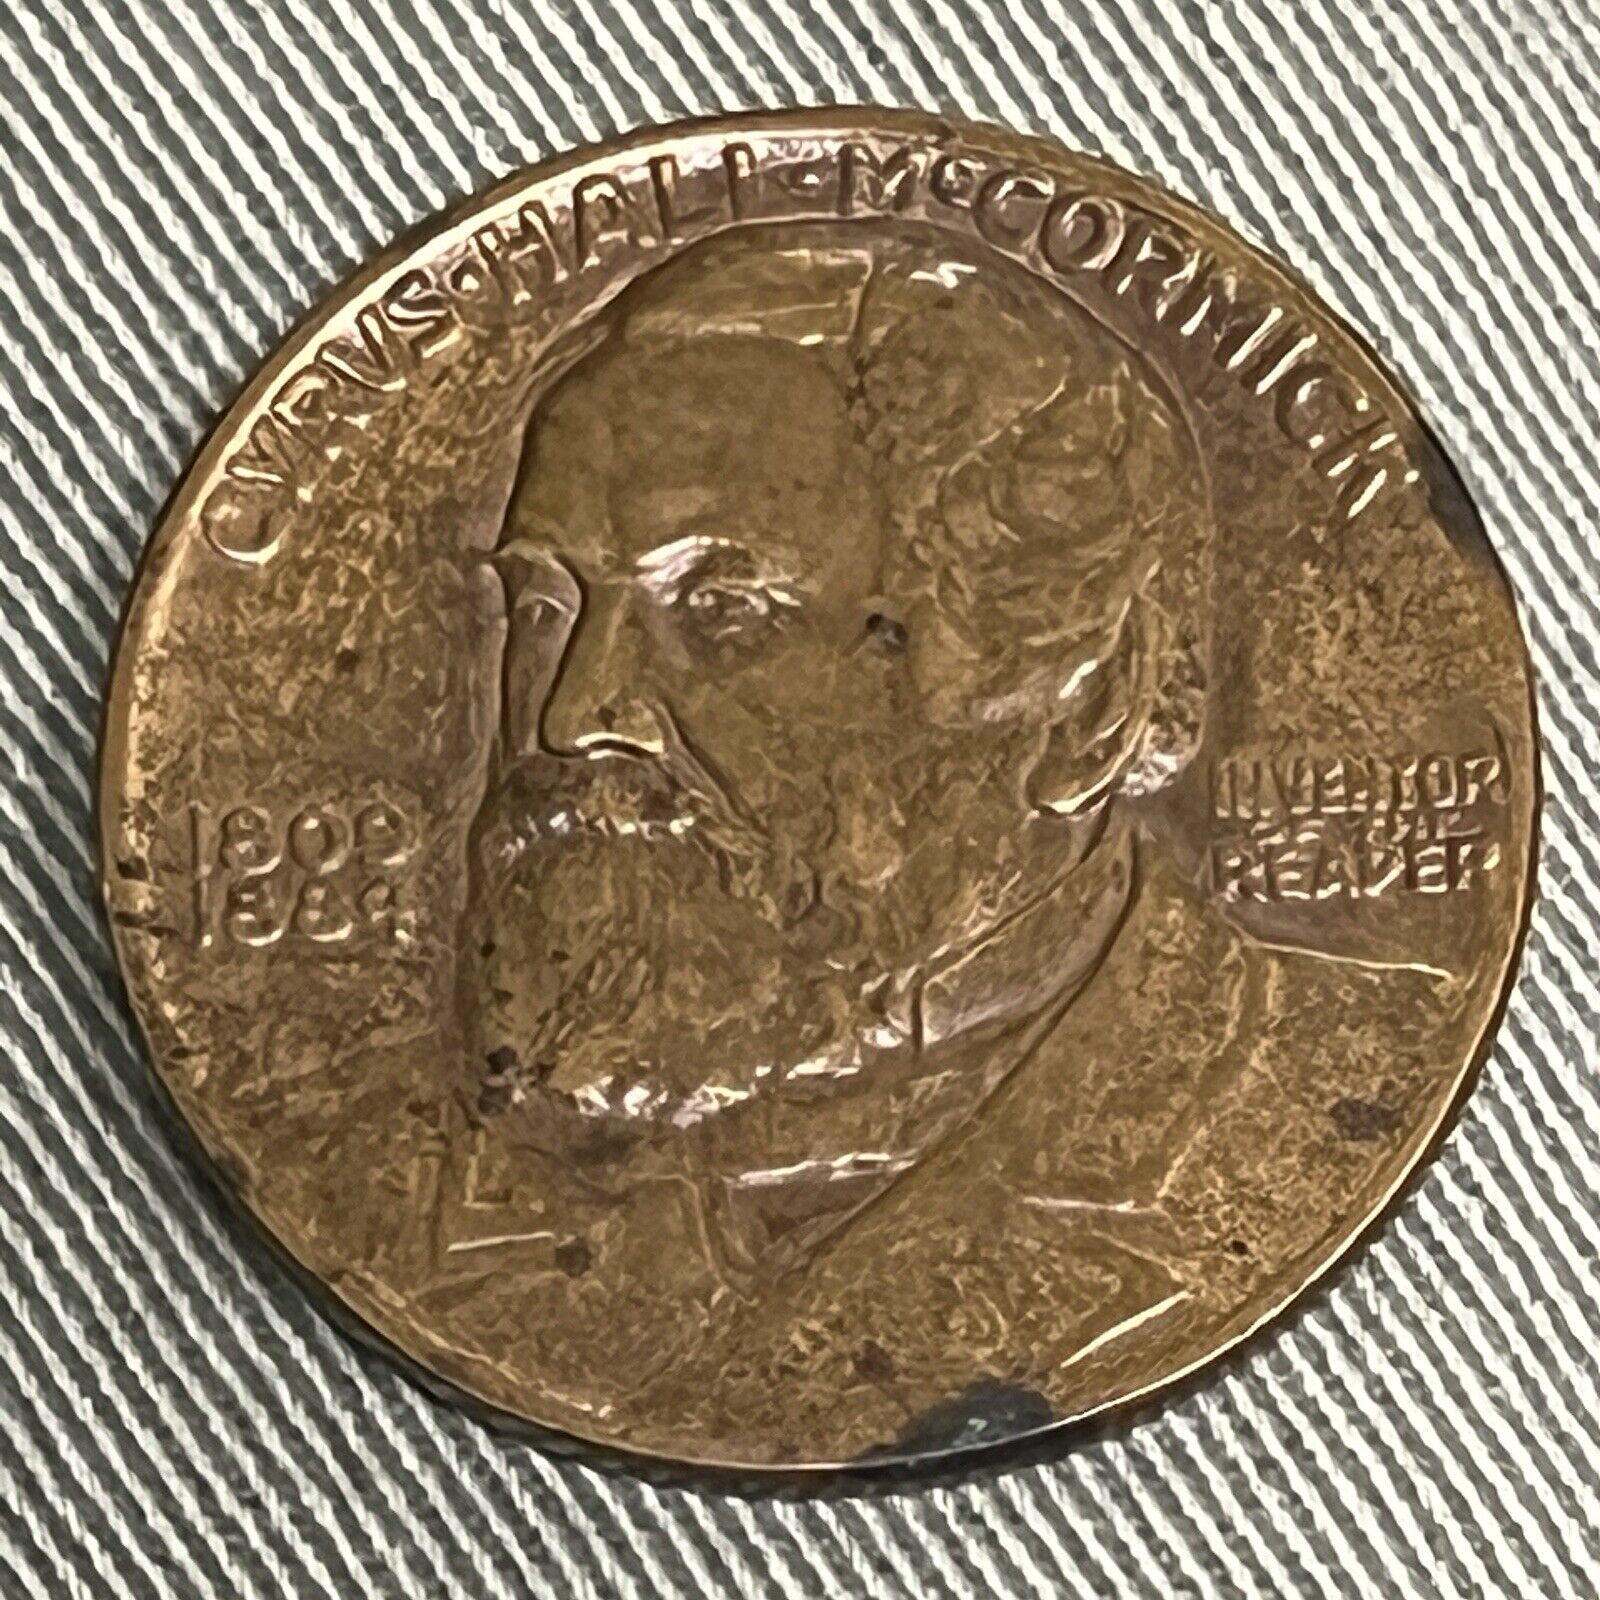 Vintage 1931 Cyrus Hall McCormick International Harvester Reaper Coin